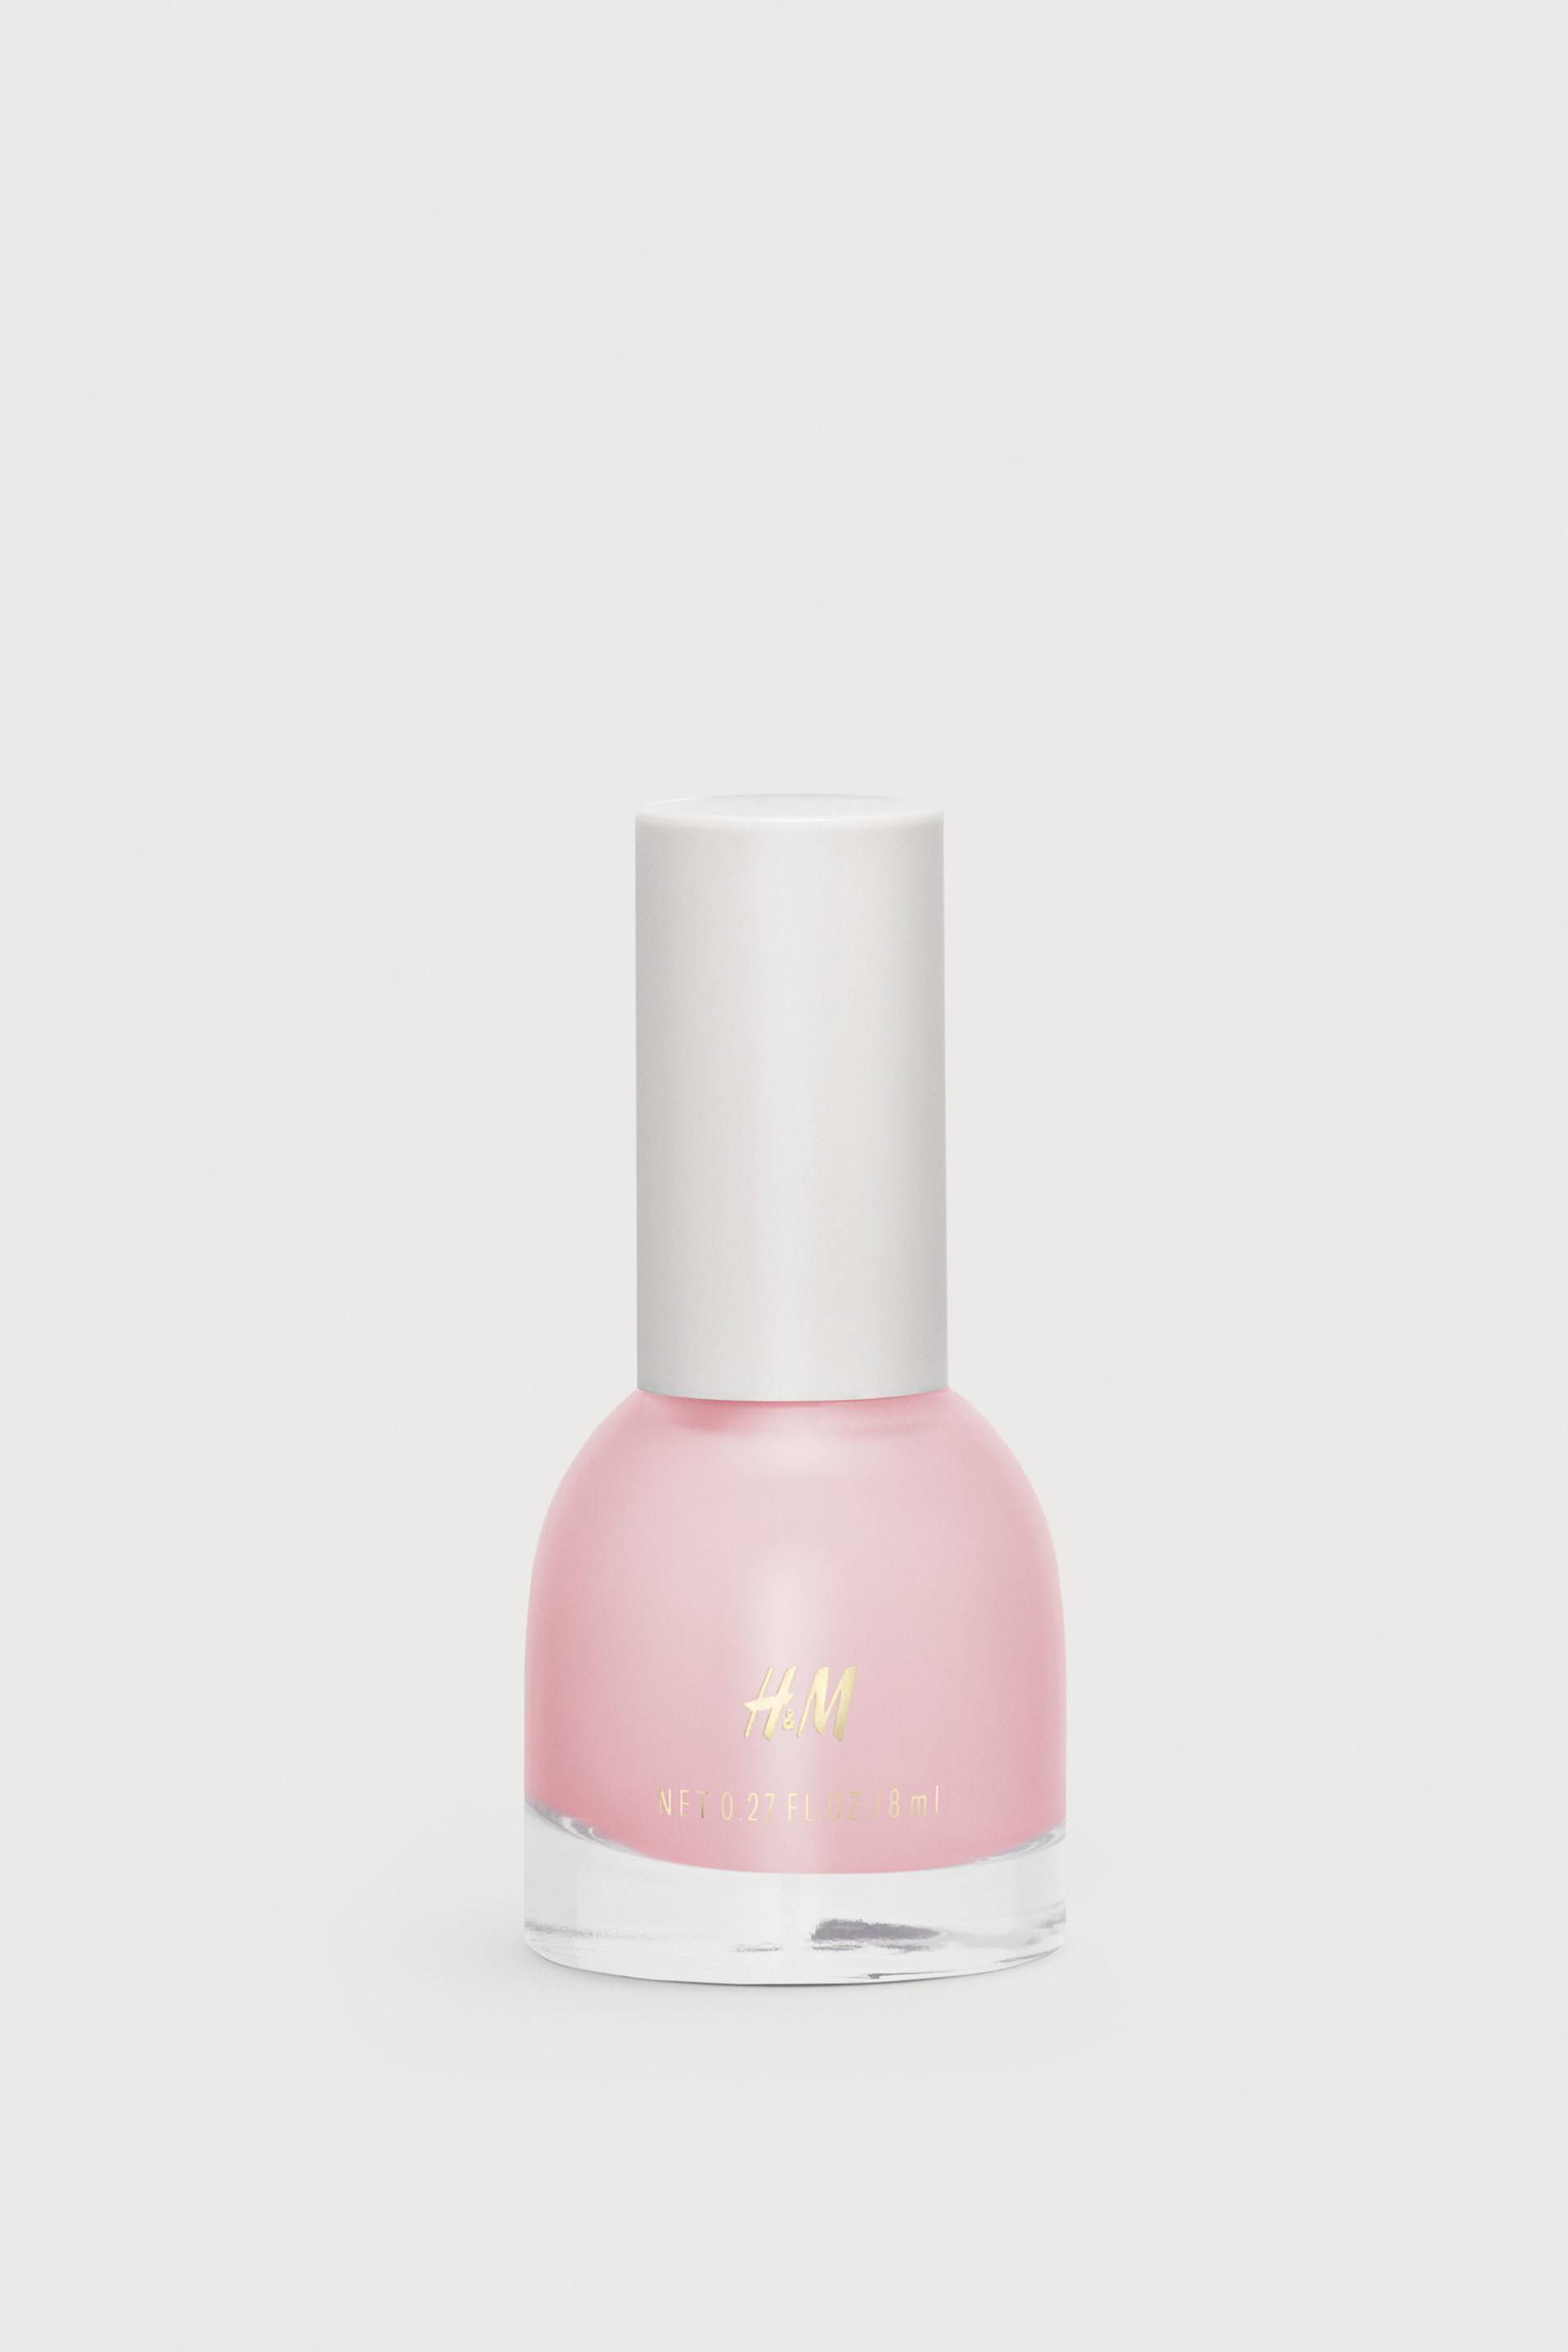 H&M Basislack Hellrosa, Nagellack. Farbe: Light pink von H&M